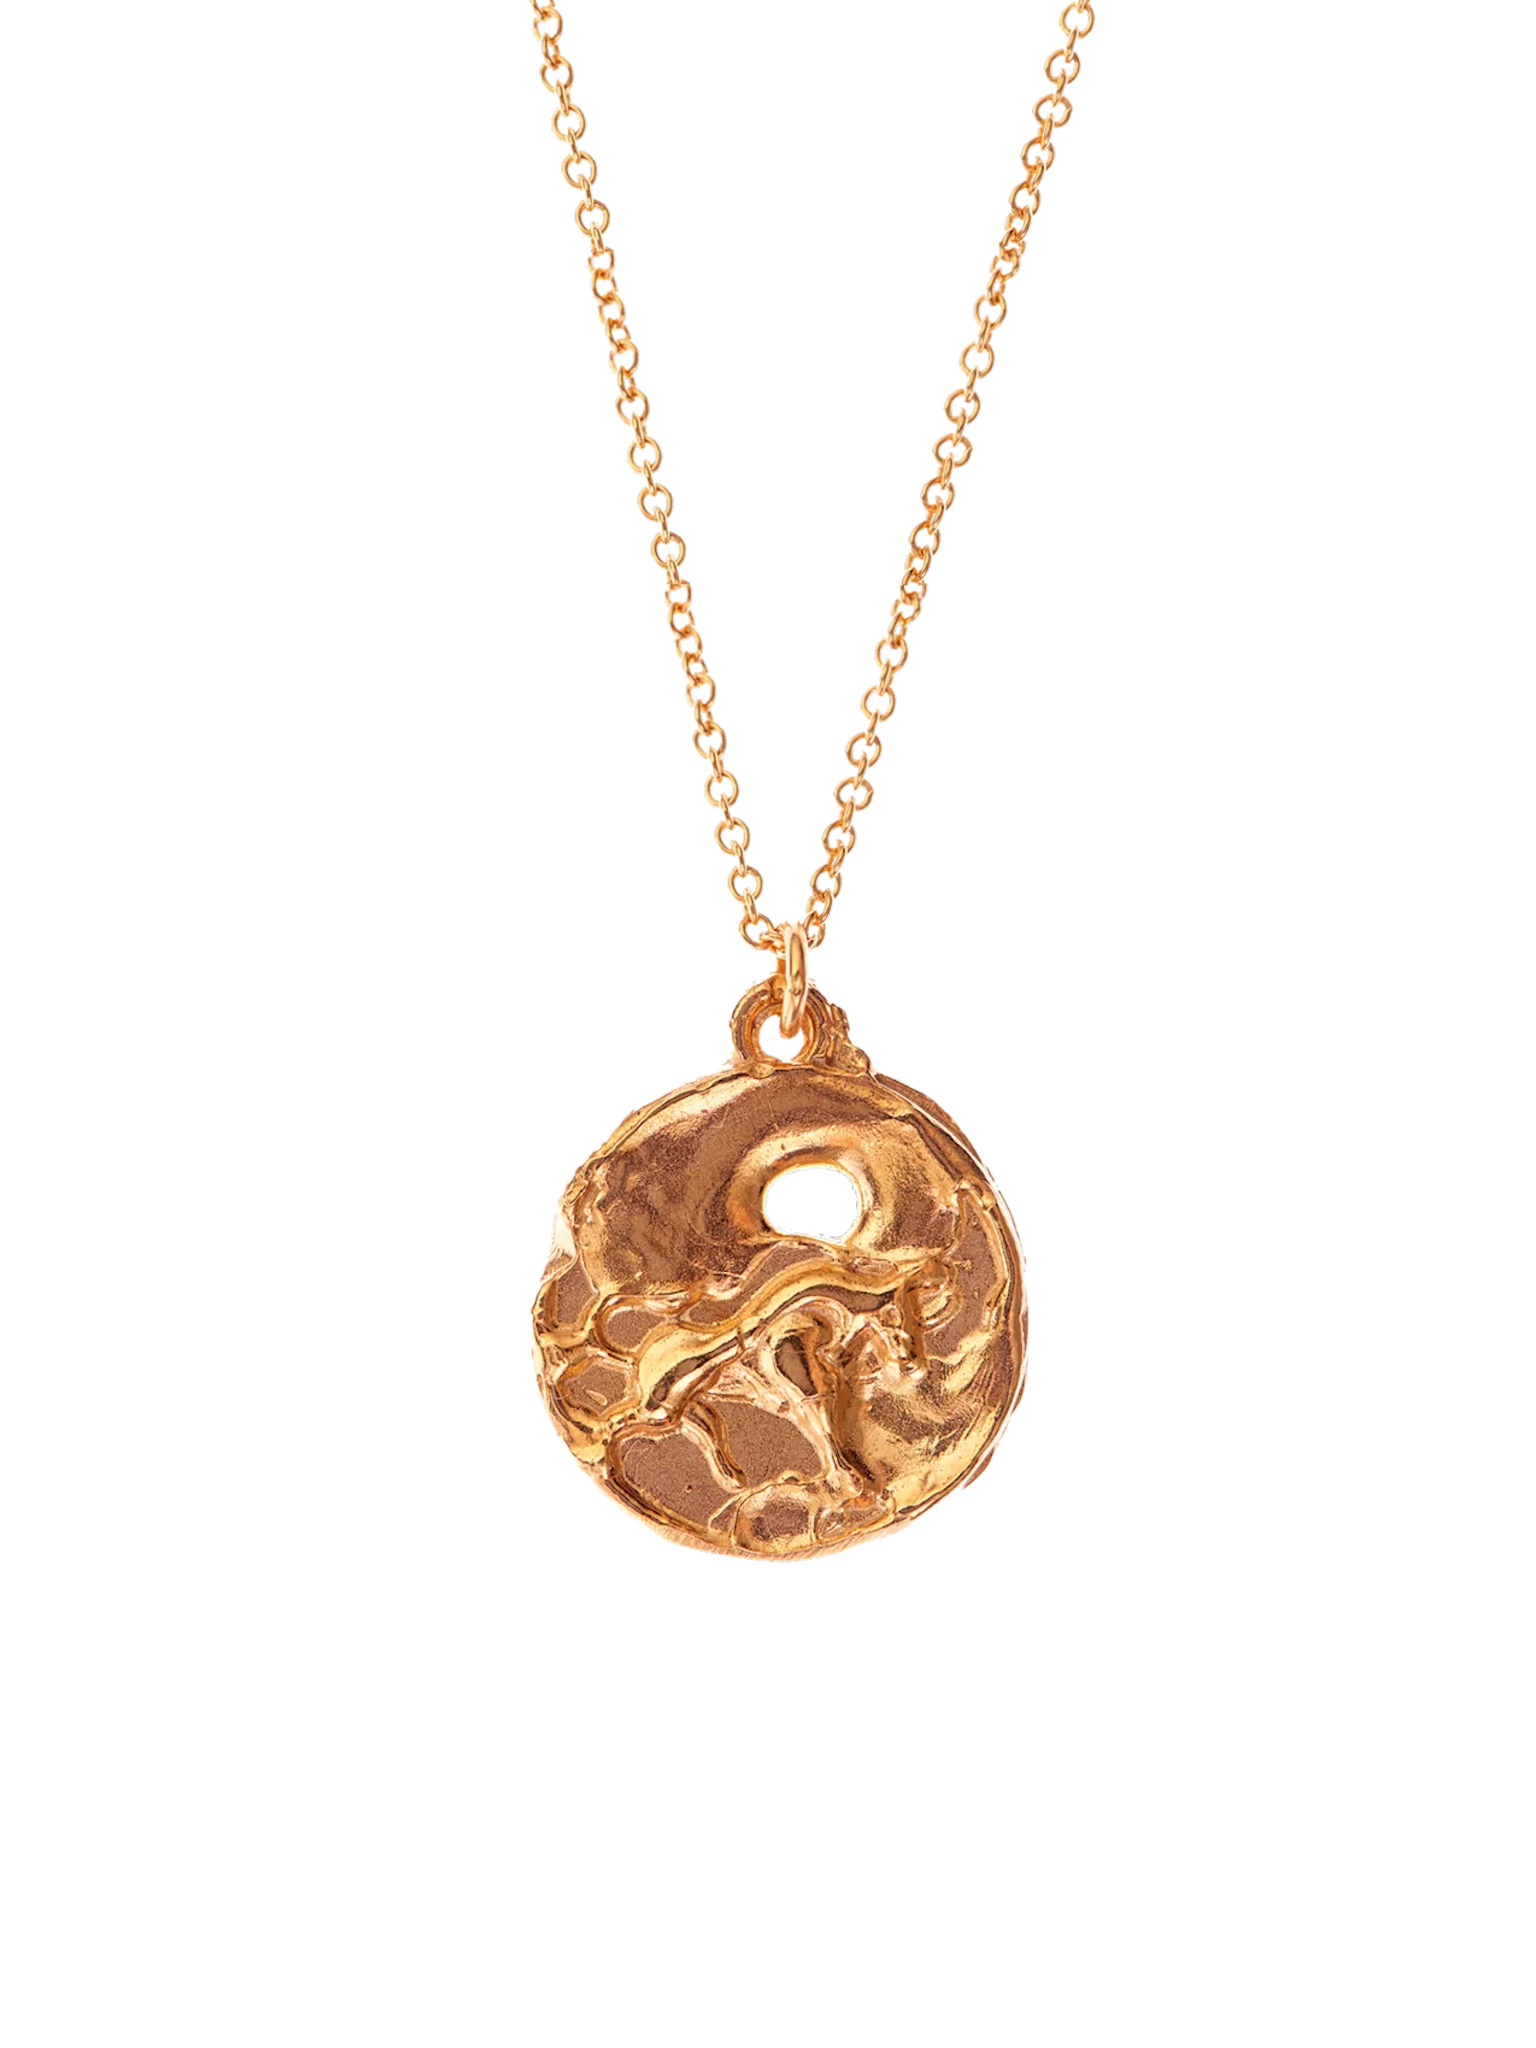 The taurus medallion necklace